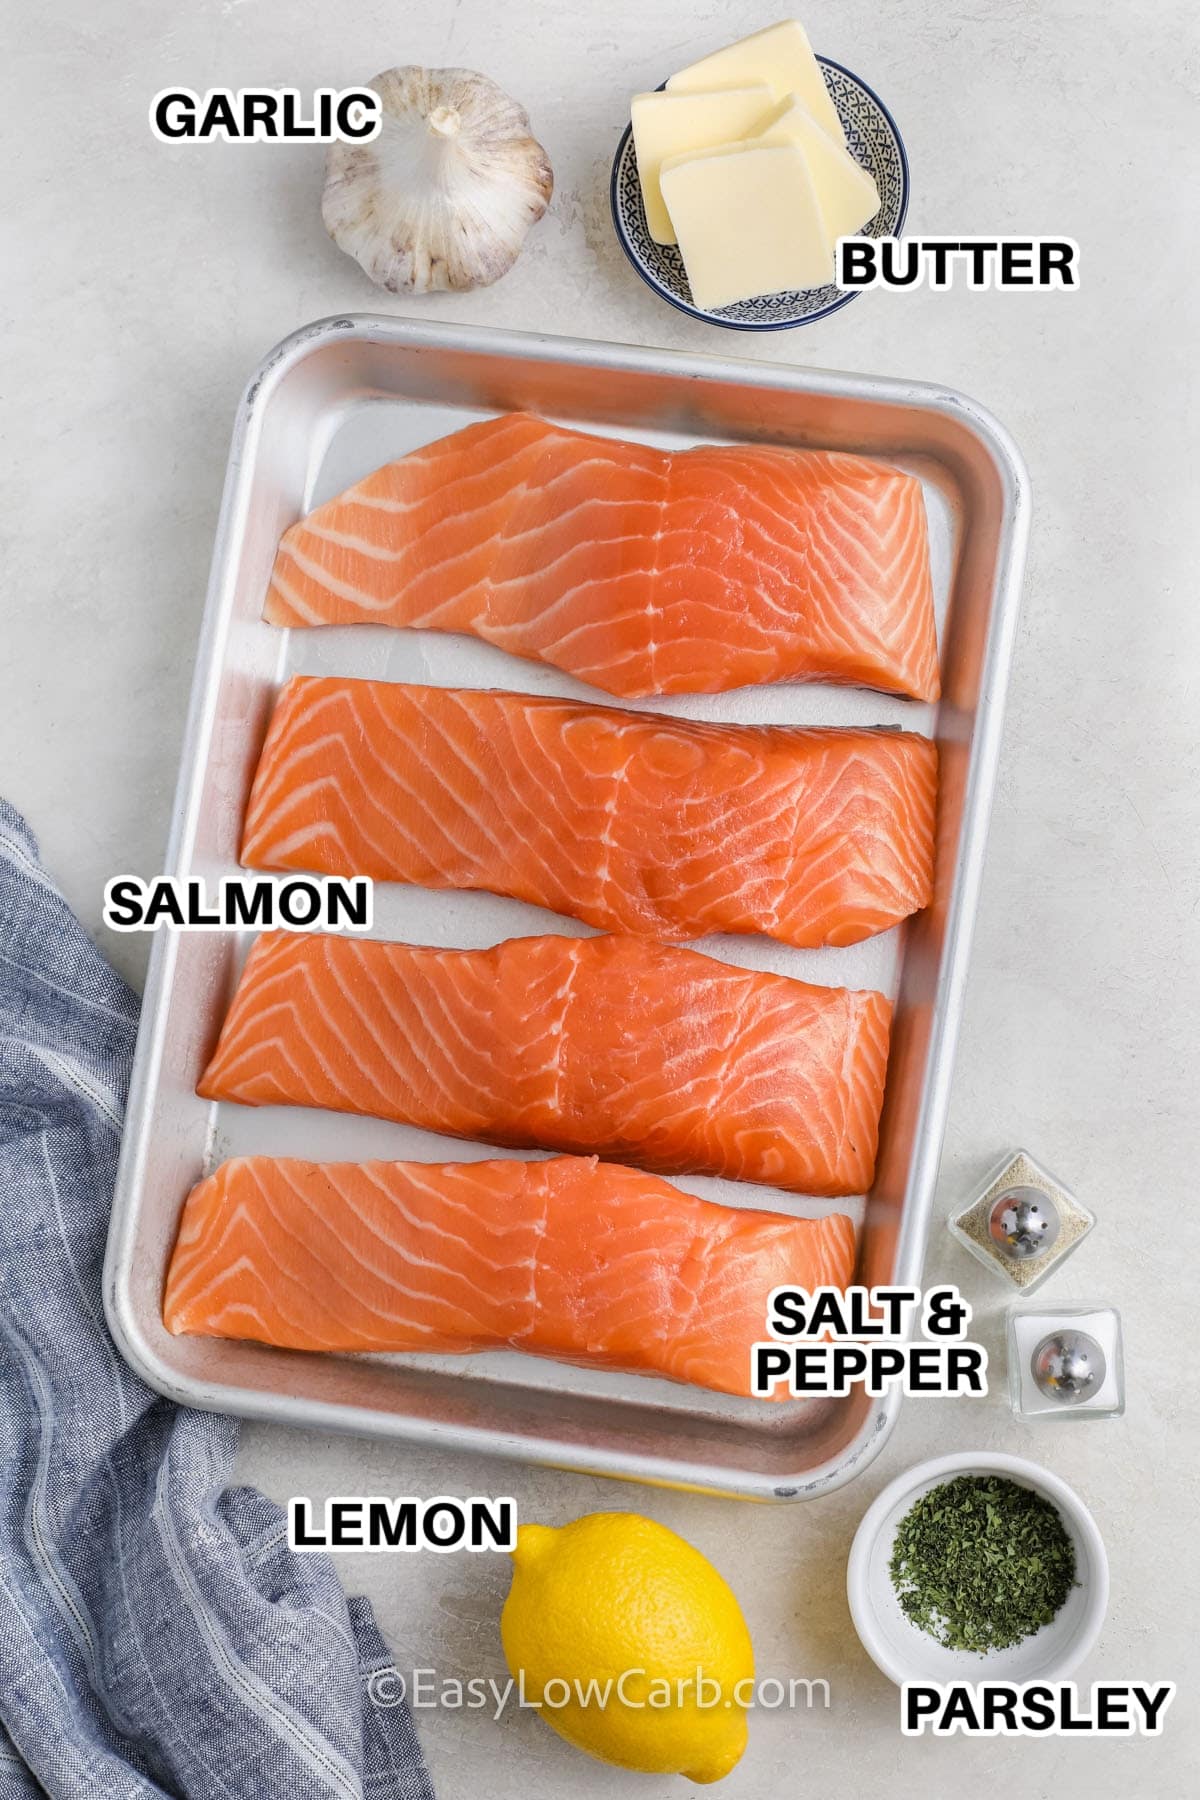 Ingredients to make Garlic Butter Salmon labeled: garlic, butter, salmon, salt & pepper, parsley, and lemon